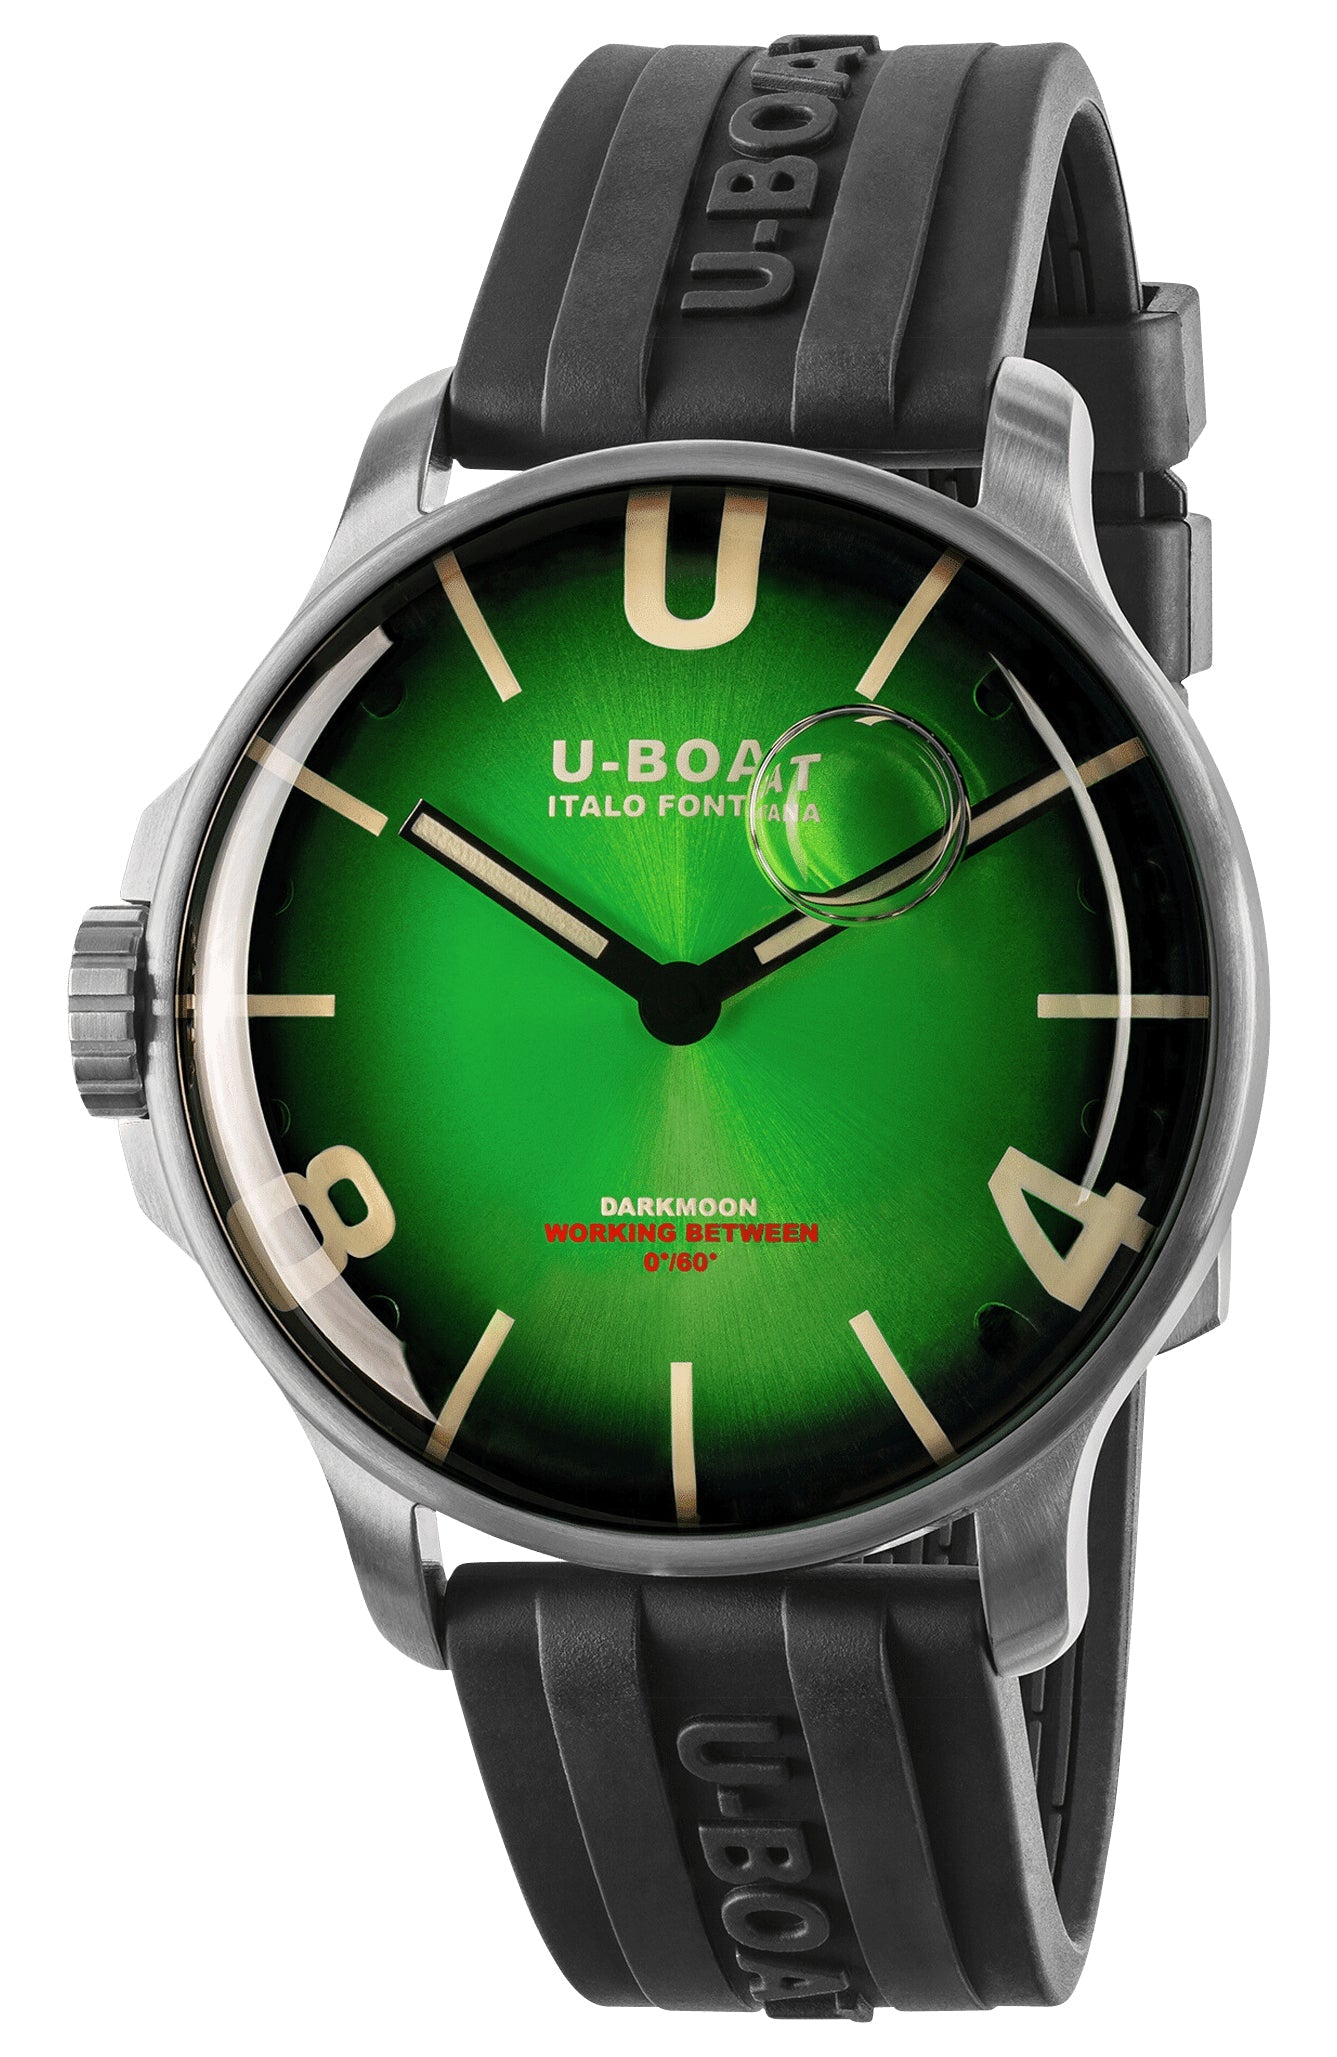 update alt-text with template Watches - Mens-U-Boat-8702-40 - 45 mm, Darkmoon, green, mens, menswatches, new arrivals, round, rpSKU_8697, rpSKU_8699, rpSKU_8700, rpSKU_8701, rpSKU_8703, rubber, stainless steel case, swiss quartz, U-Boat, watches-Watches & Beyond